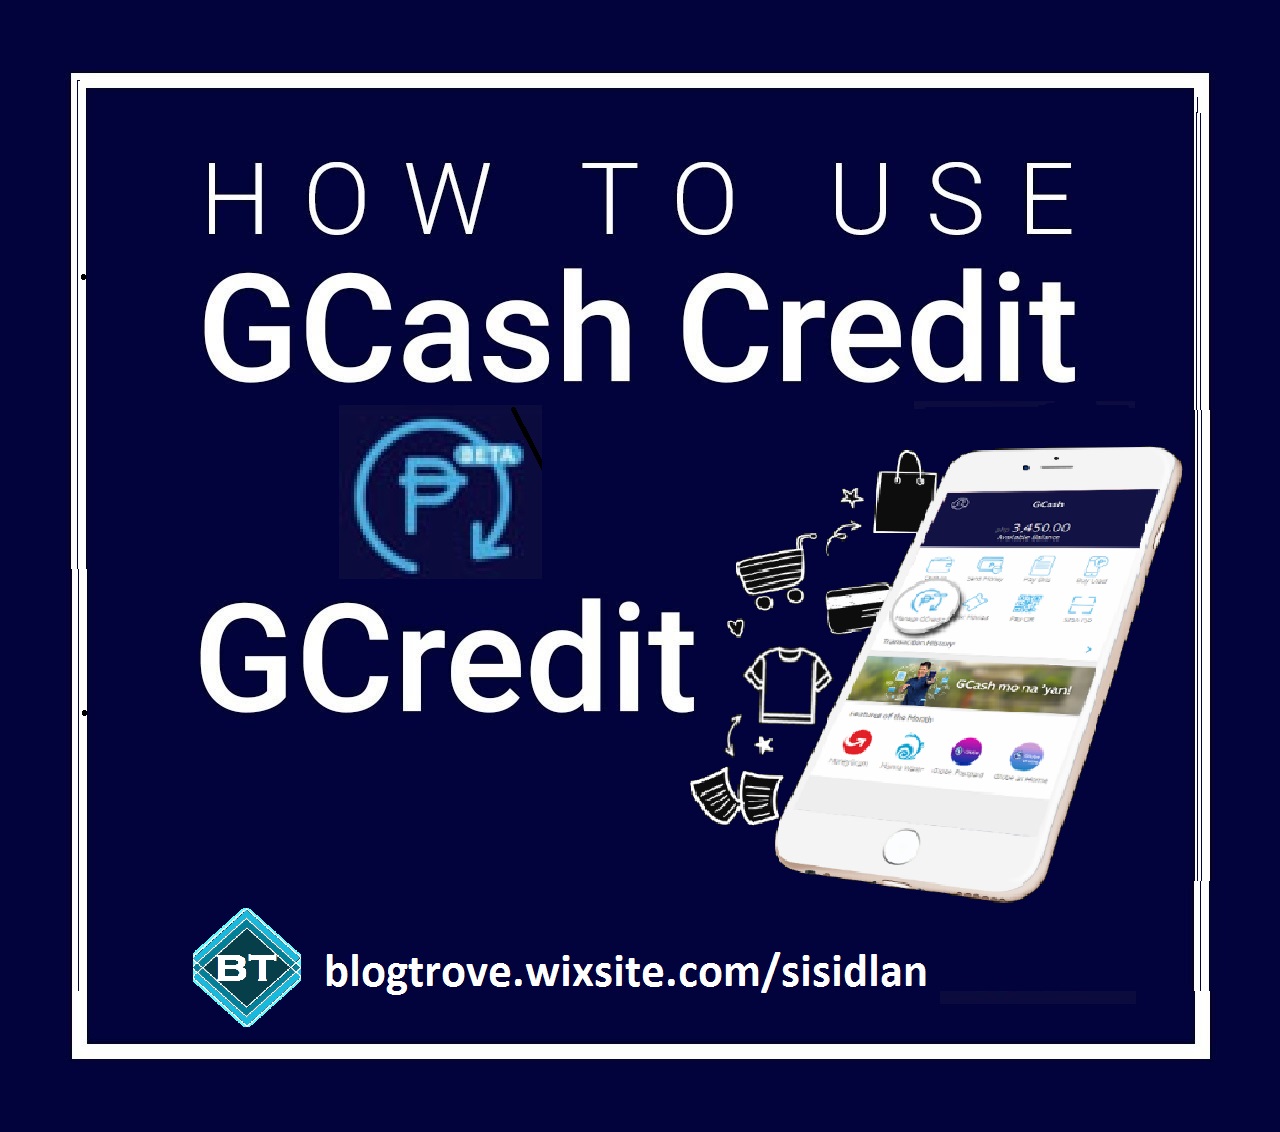 how to use gcash app